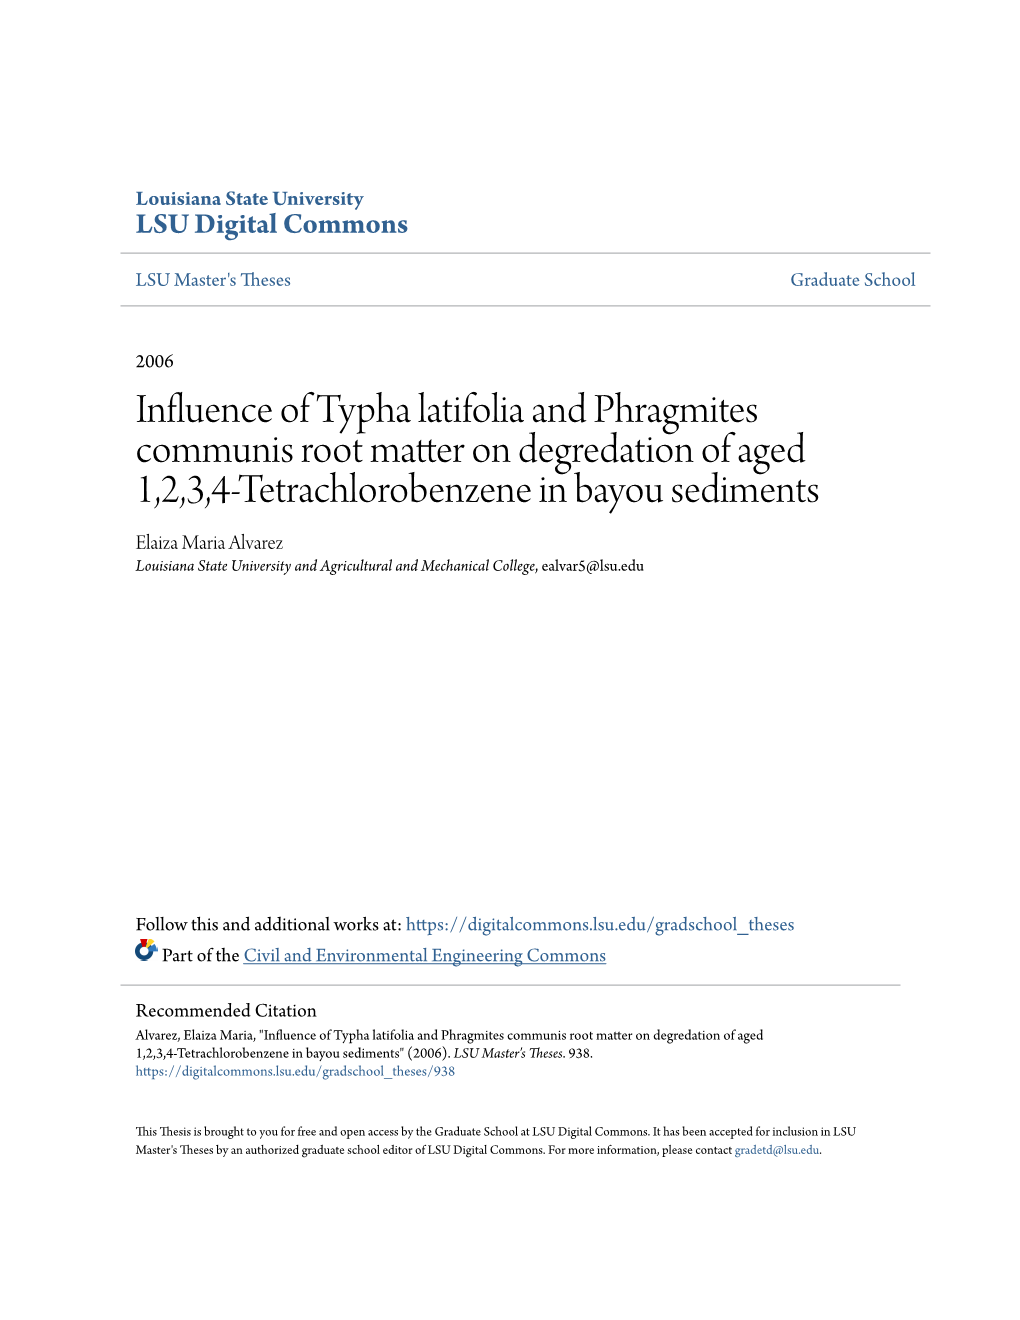 Influence of Typha Latifolia and Phragmites Communis Root Matter